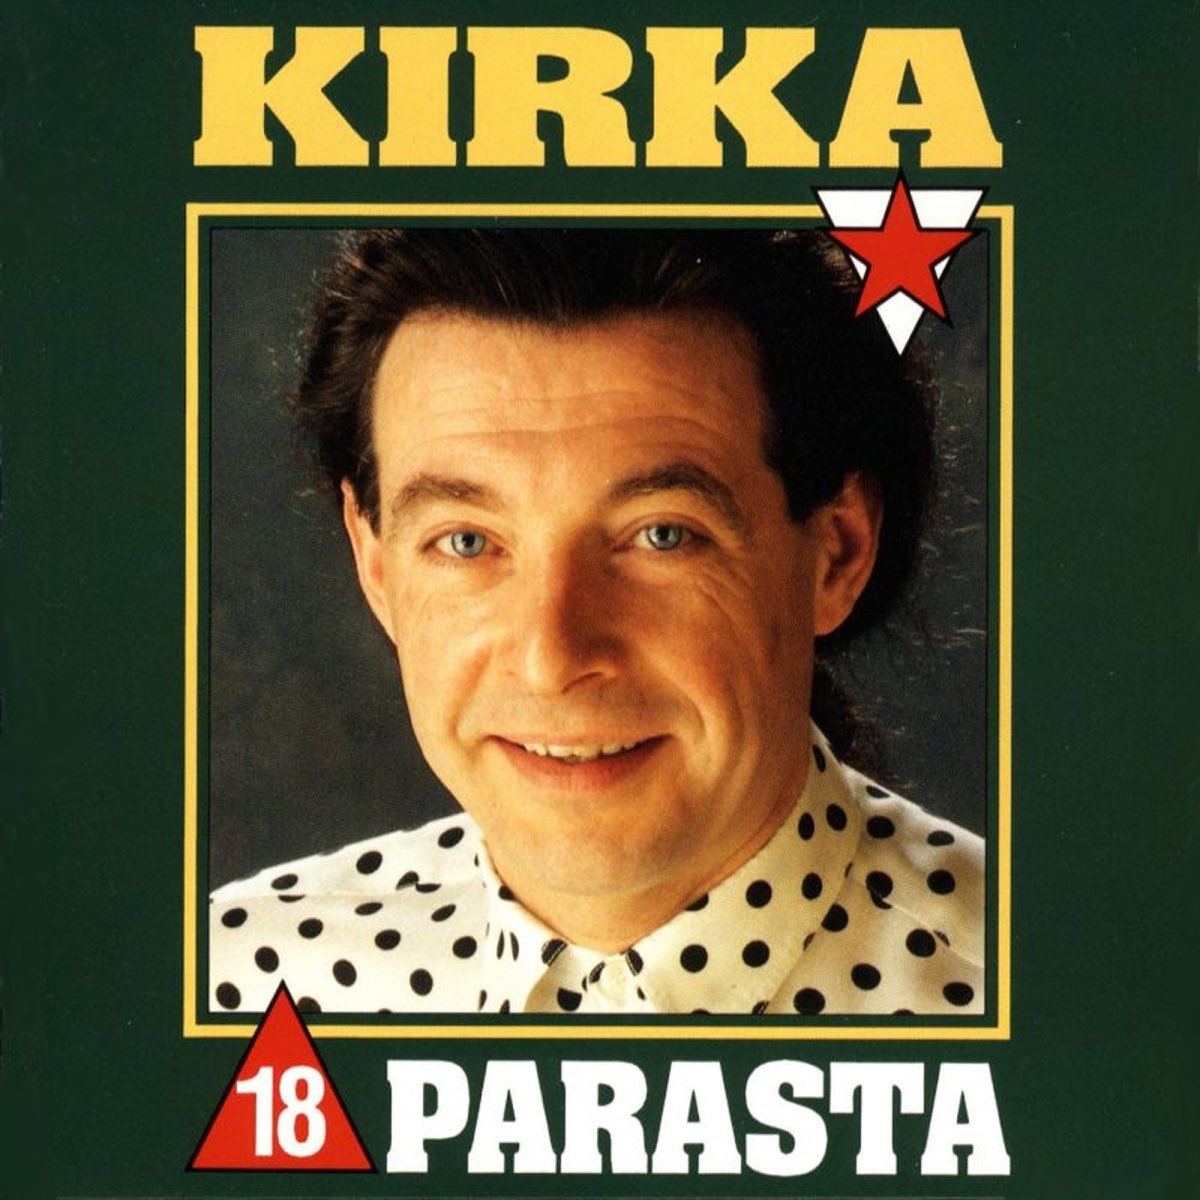 18 parasta by Kirka on Apple Music